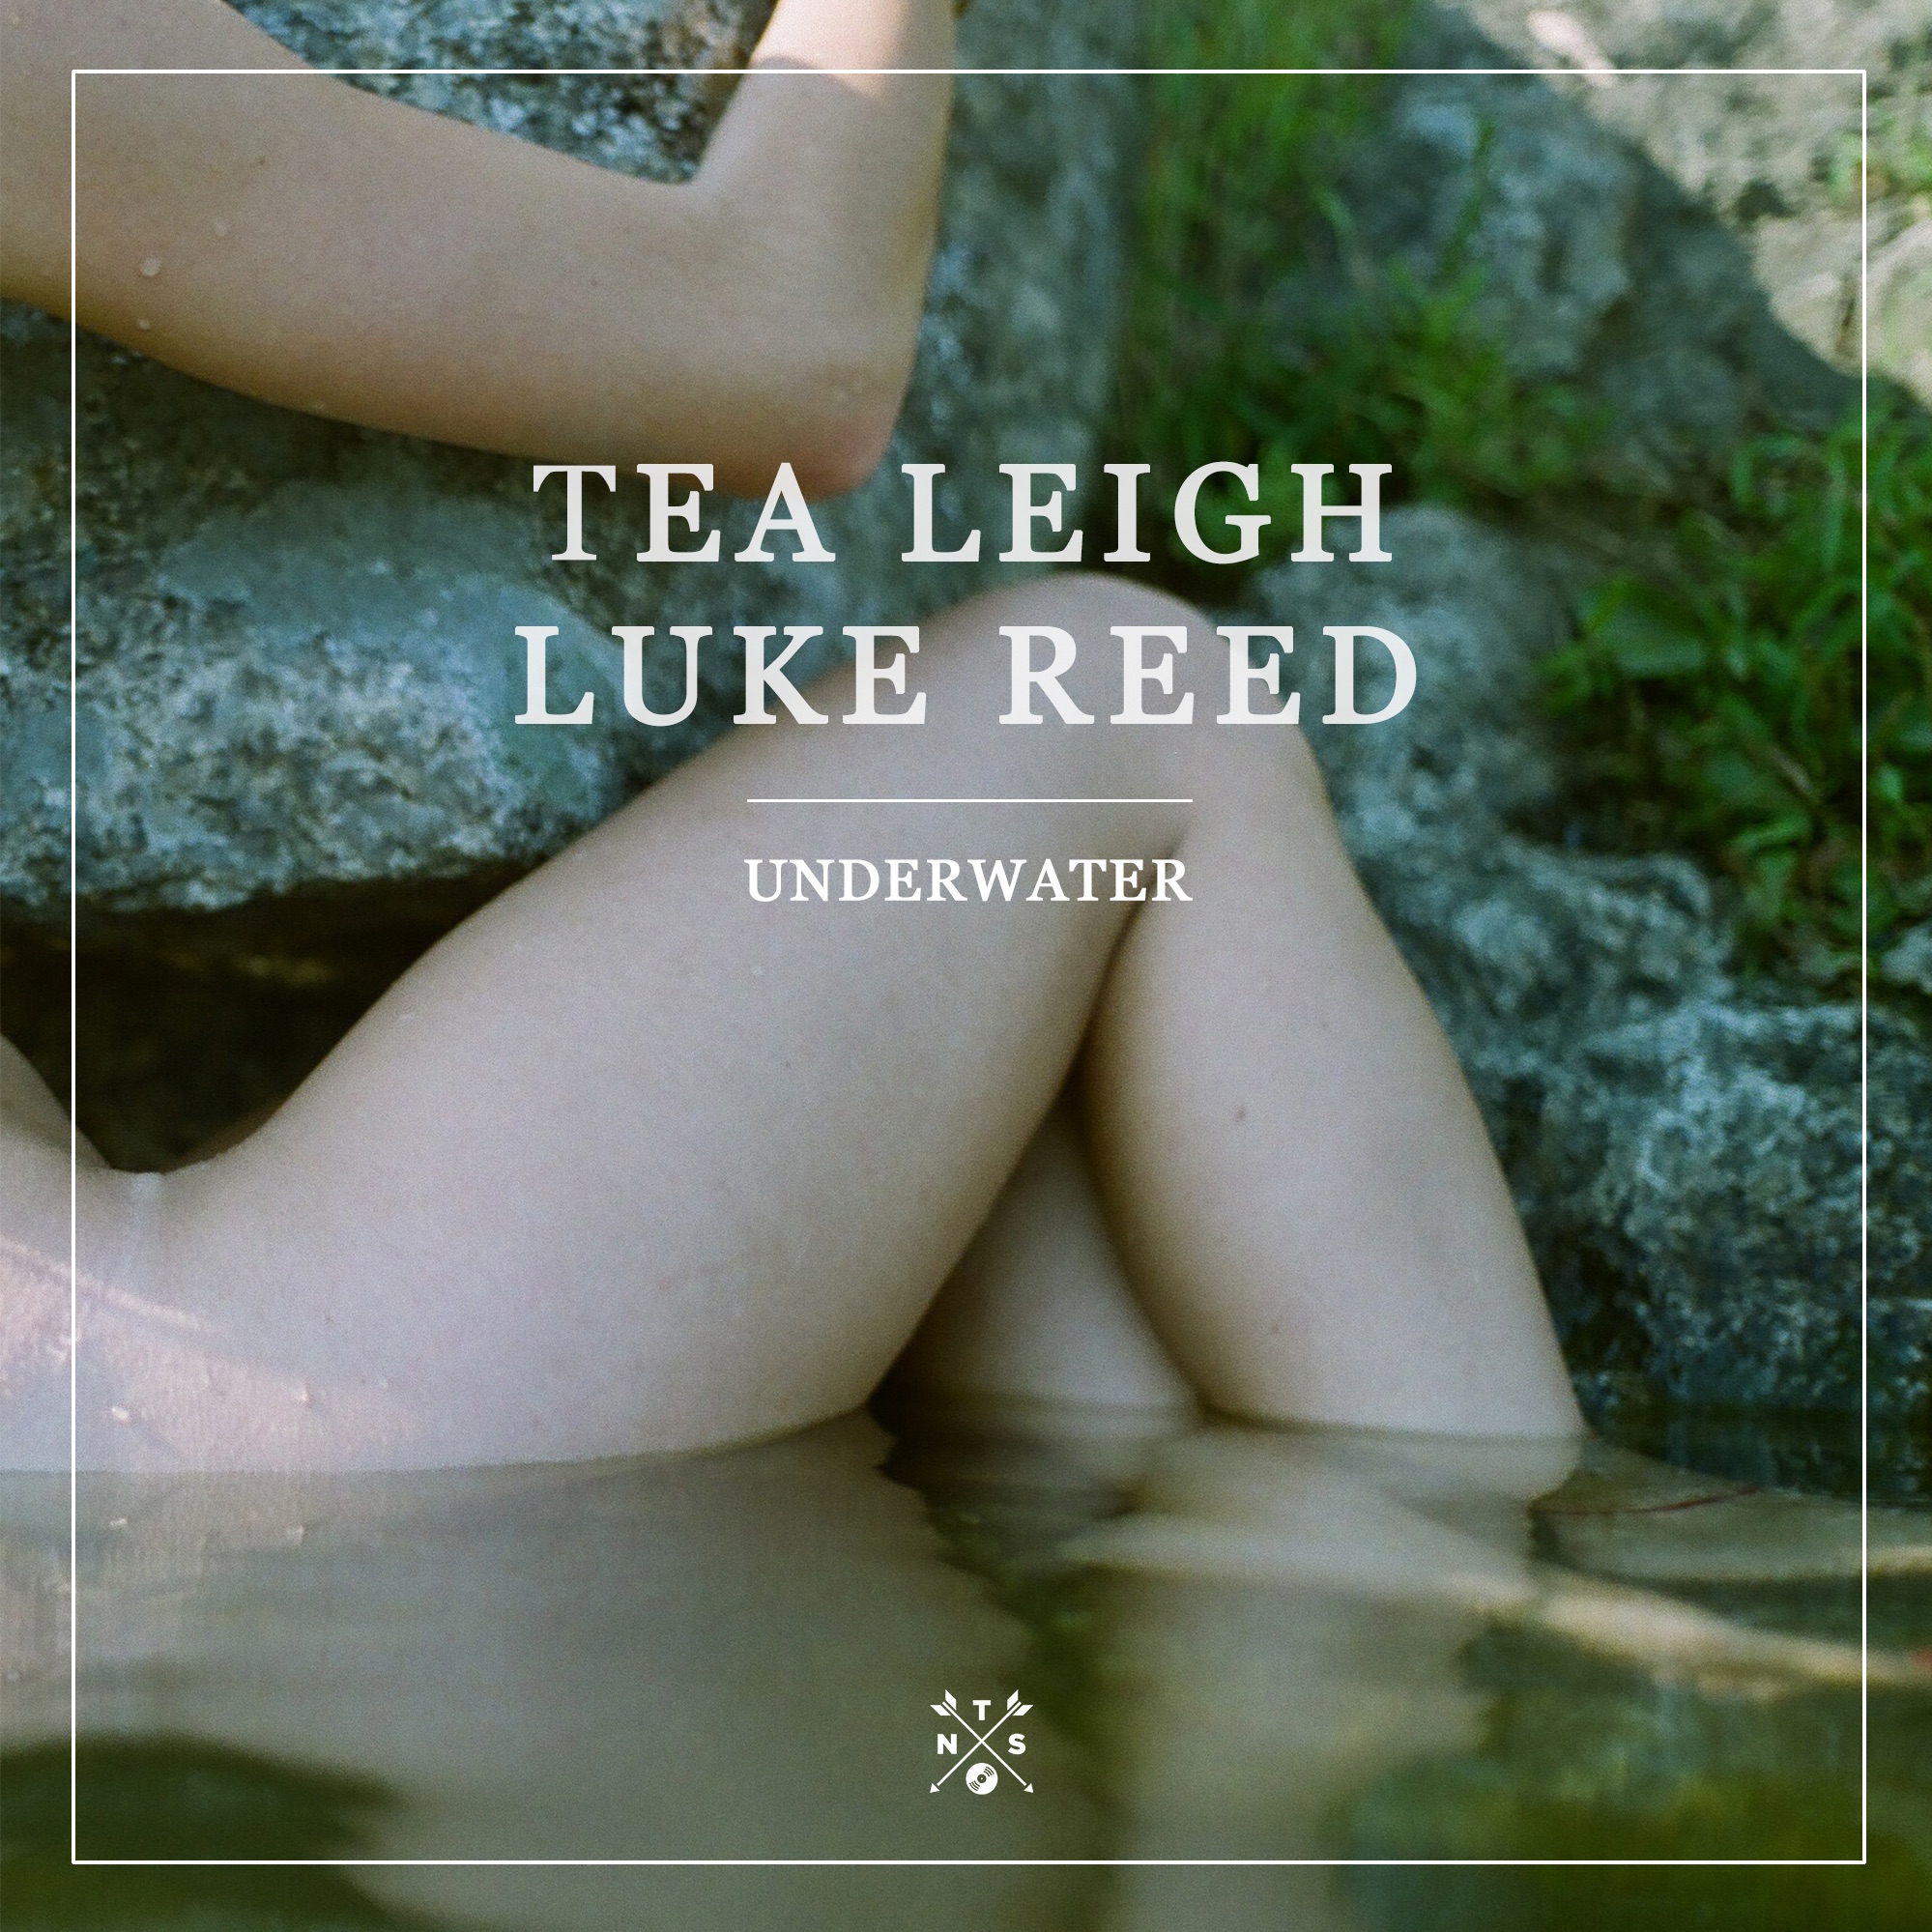 Tea Leigh and Luke Reed – “Underwater”